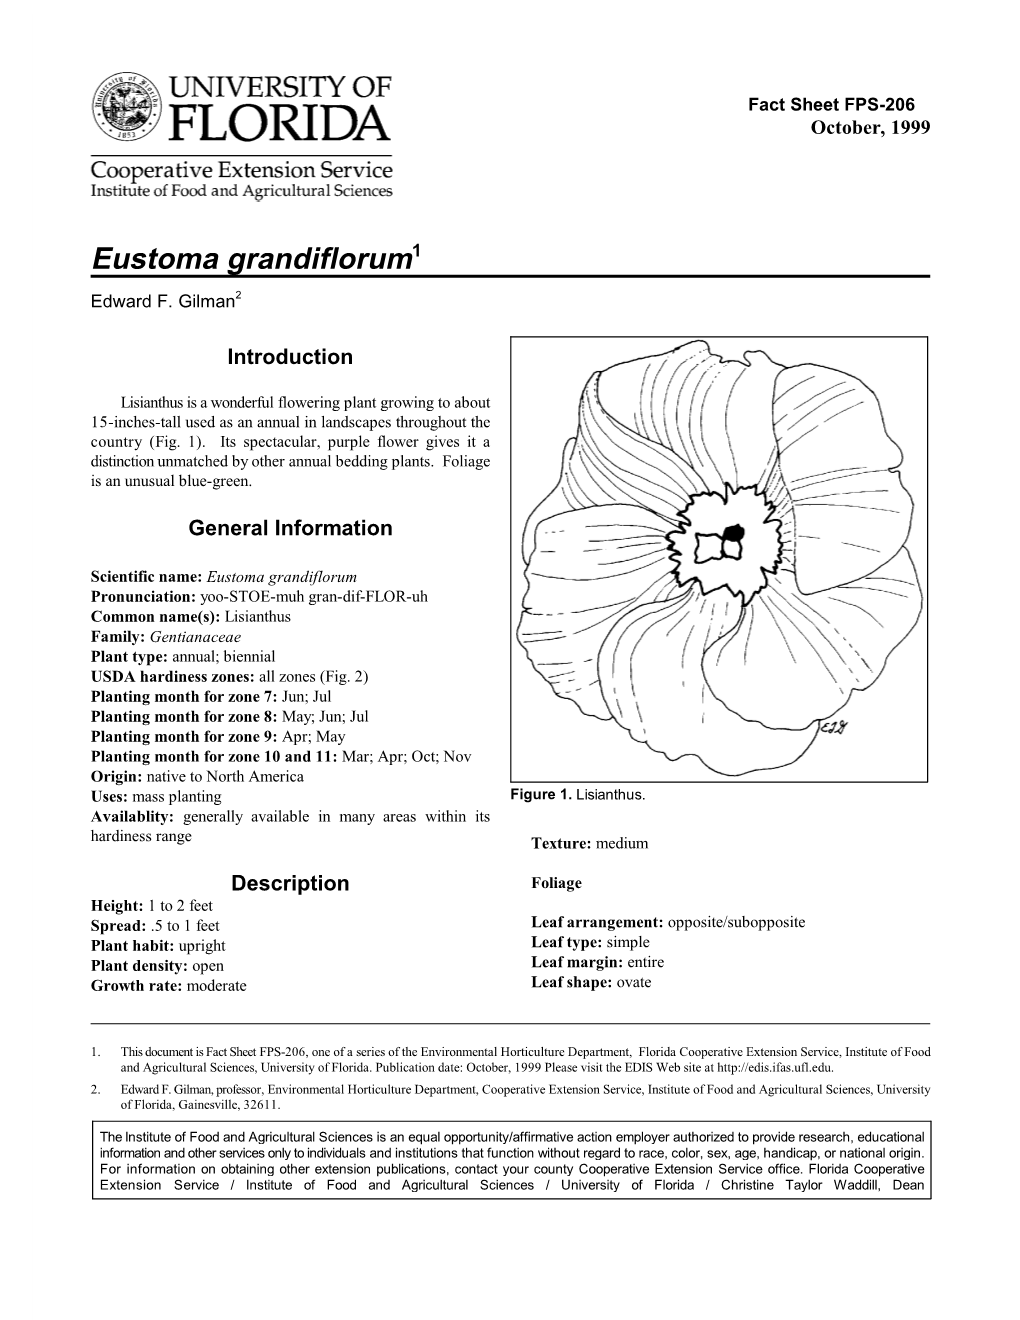 Eustoma Grandiflorum1